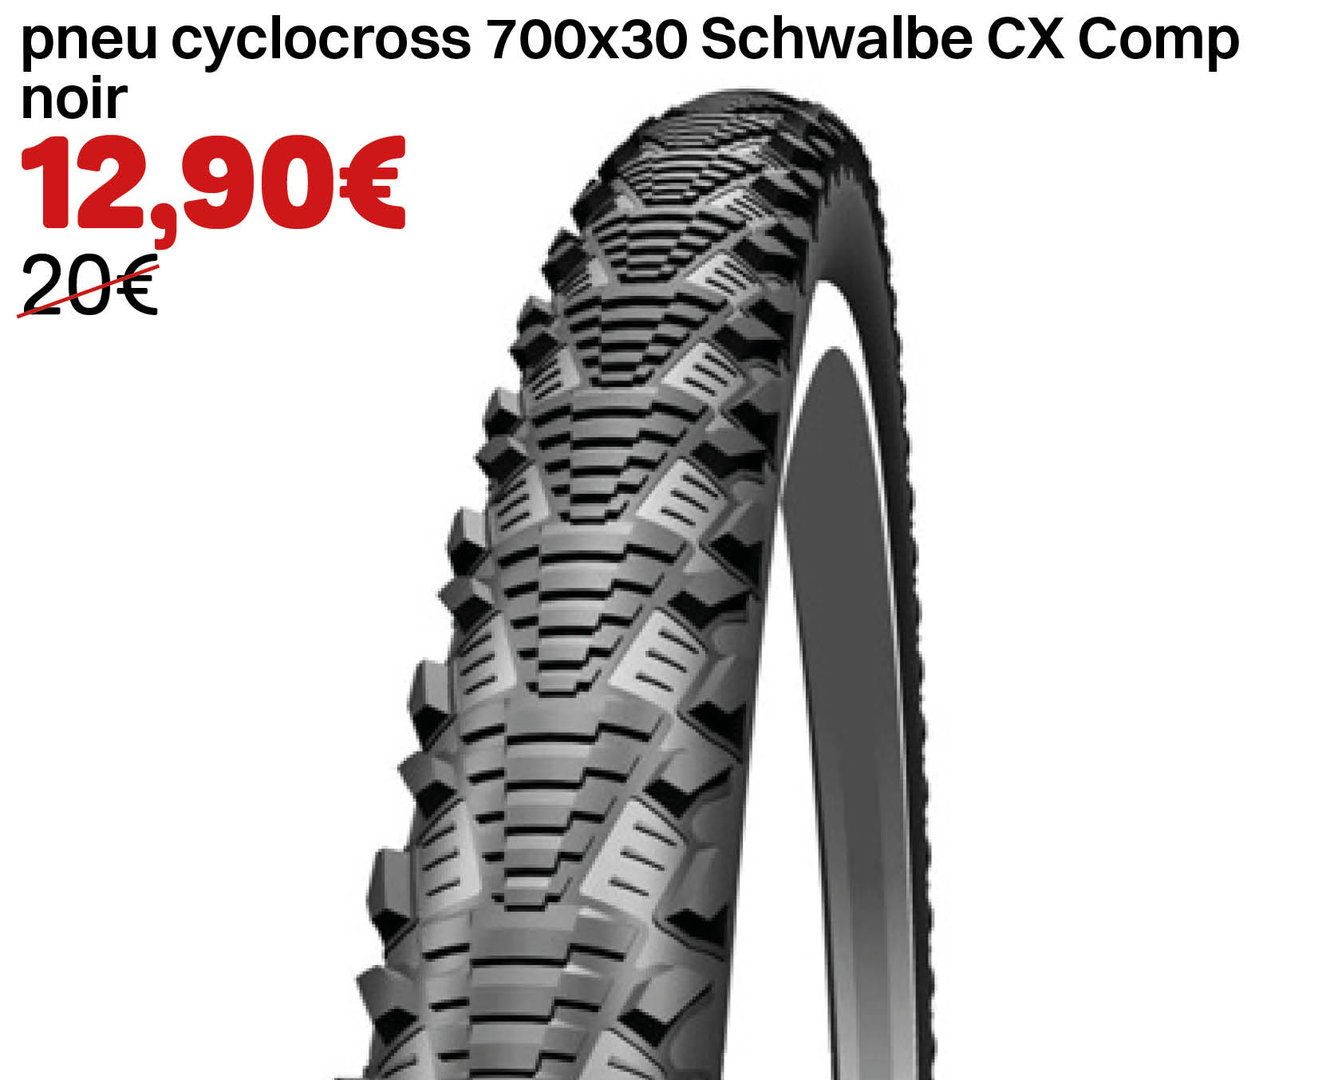 fabricant Schwalbe Pneu cyclocross 700x30 cx comp noir tr 30-622 